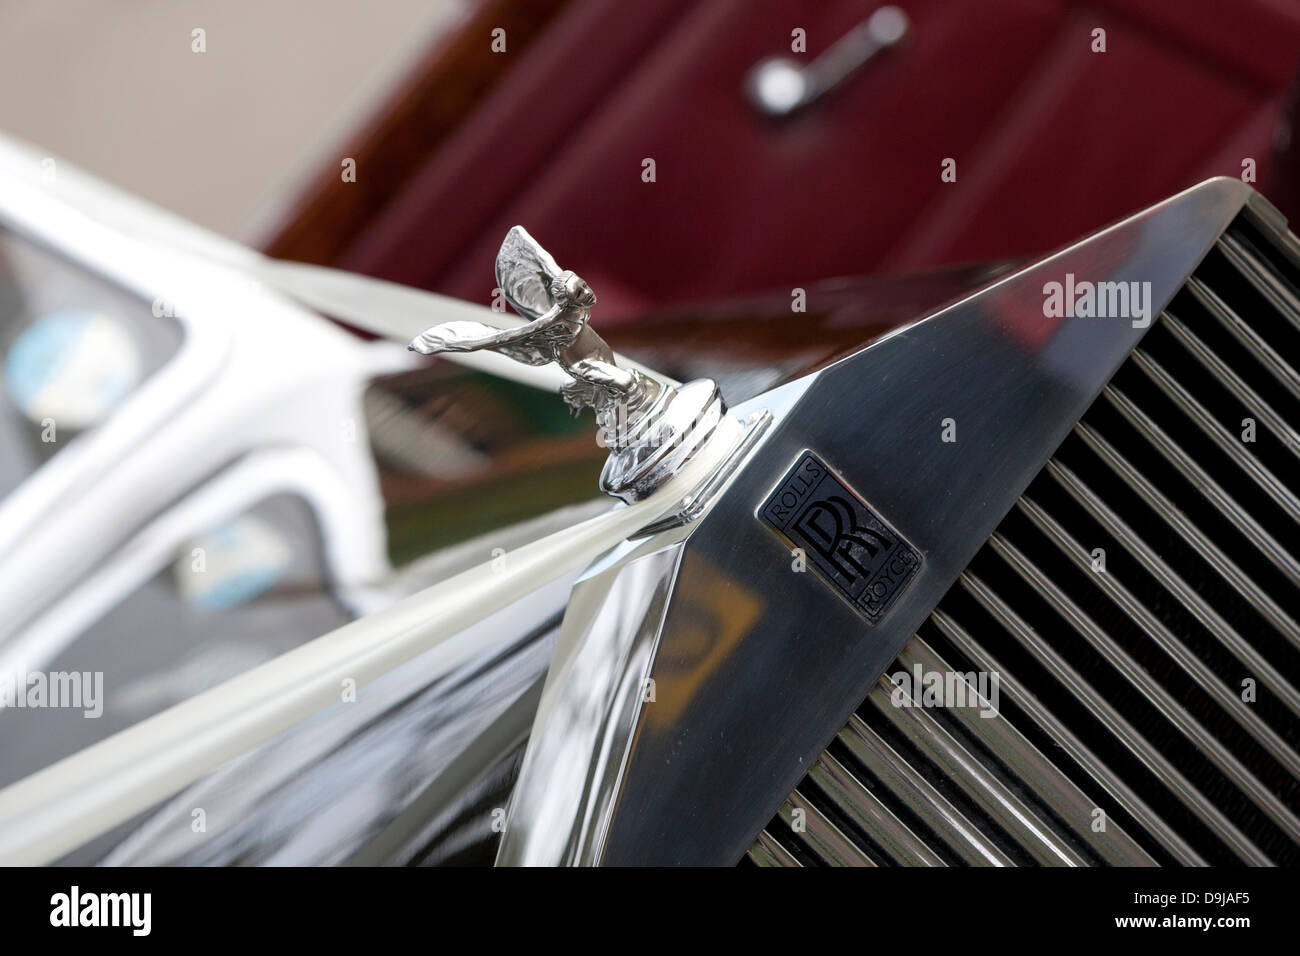 Front detail of Rolls Royce wedding car showing ribbon, grille, radiator, spirit of ecstasy emblem Stock Photo